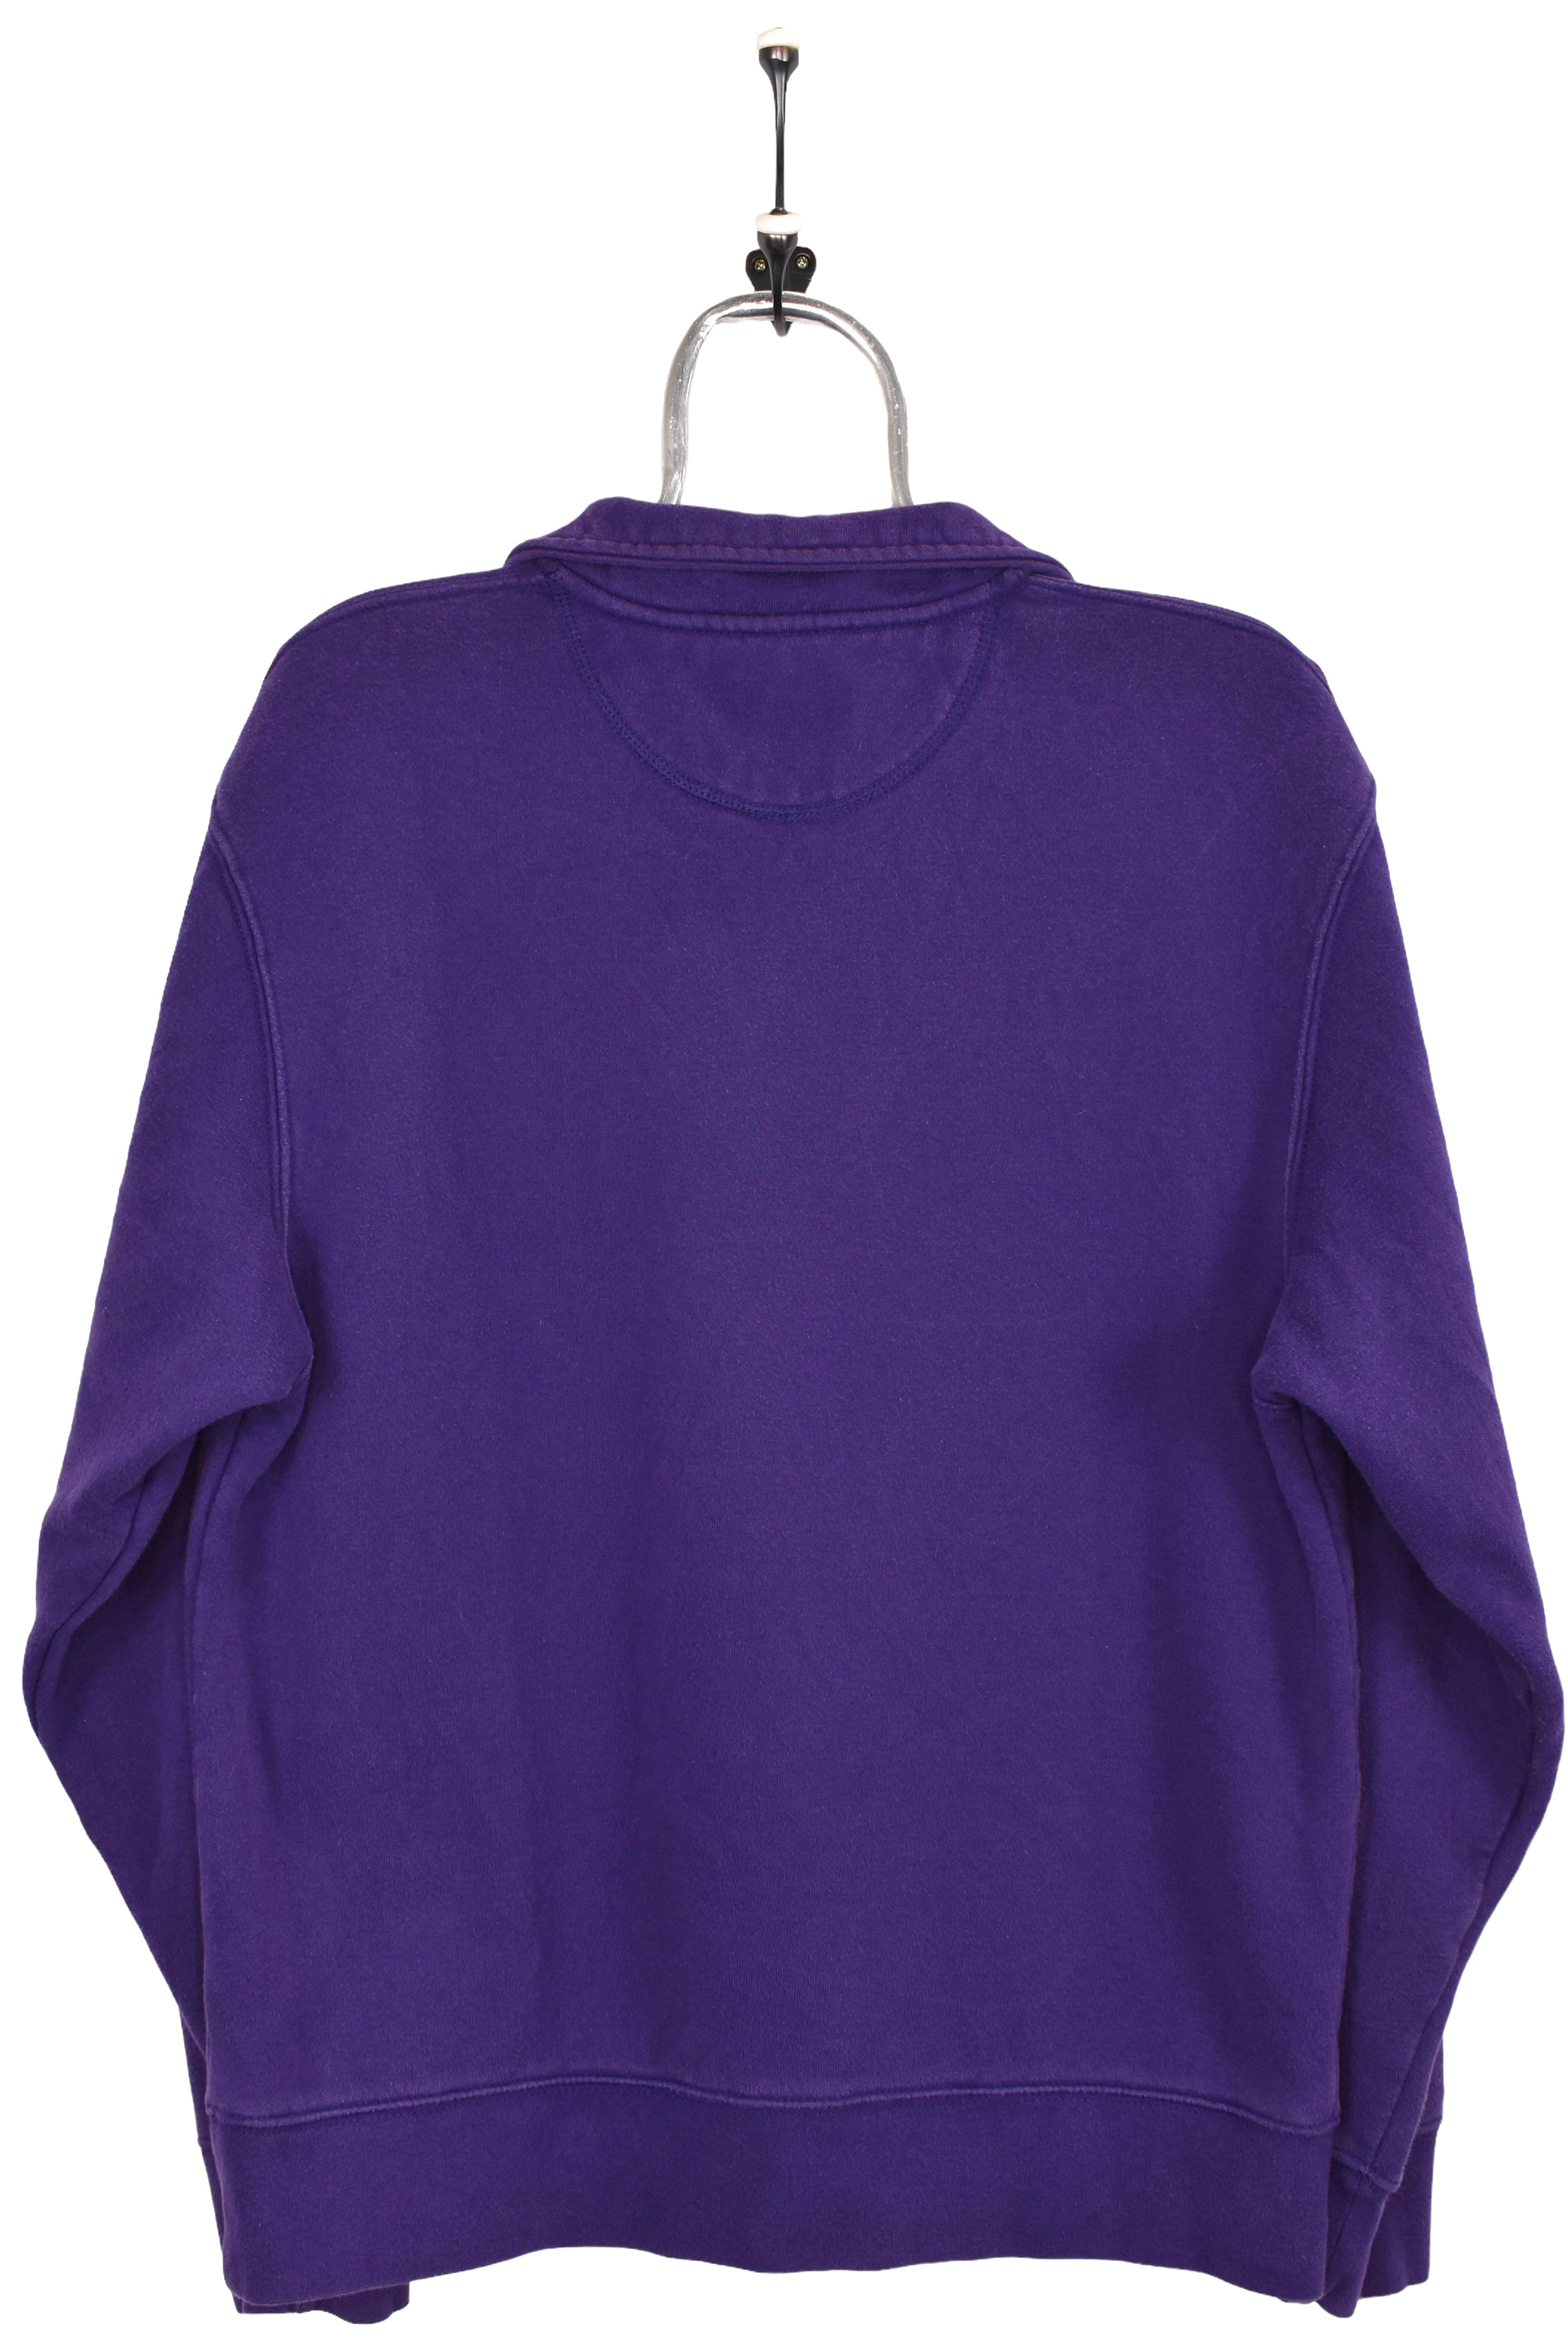 Vintage Ashland Eagles sweatshirt, purple graphic 1/4 zip jumper - Medium